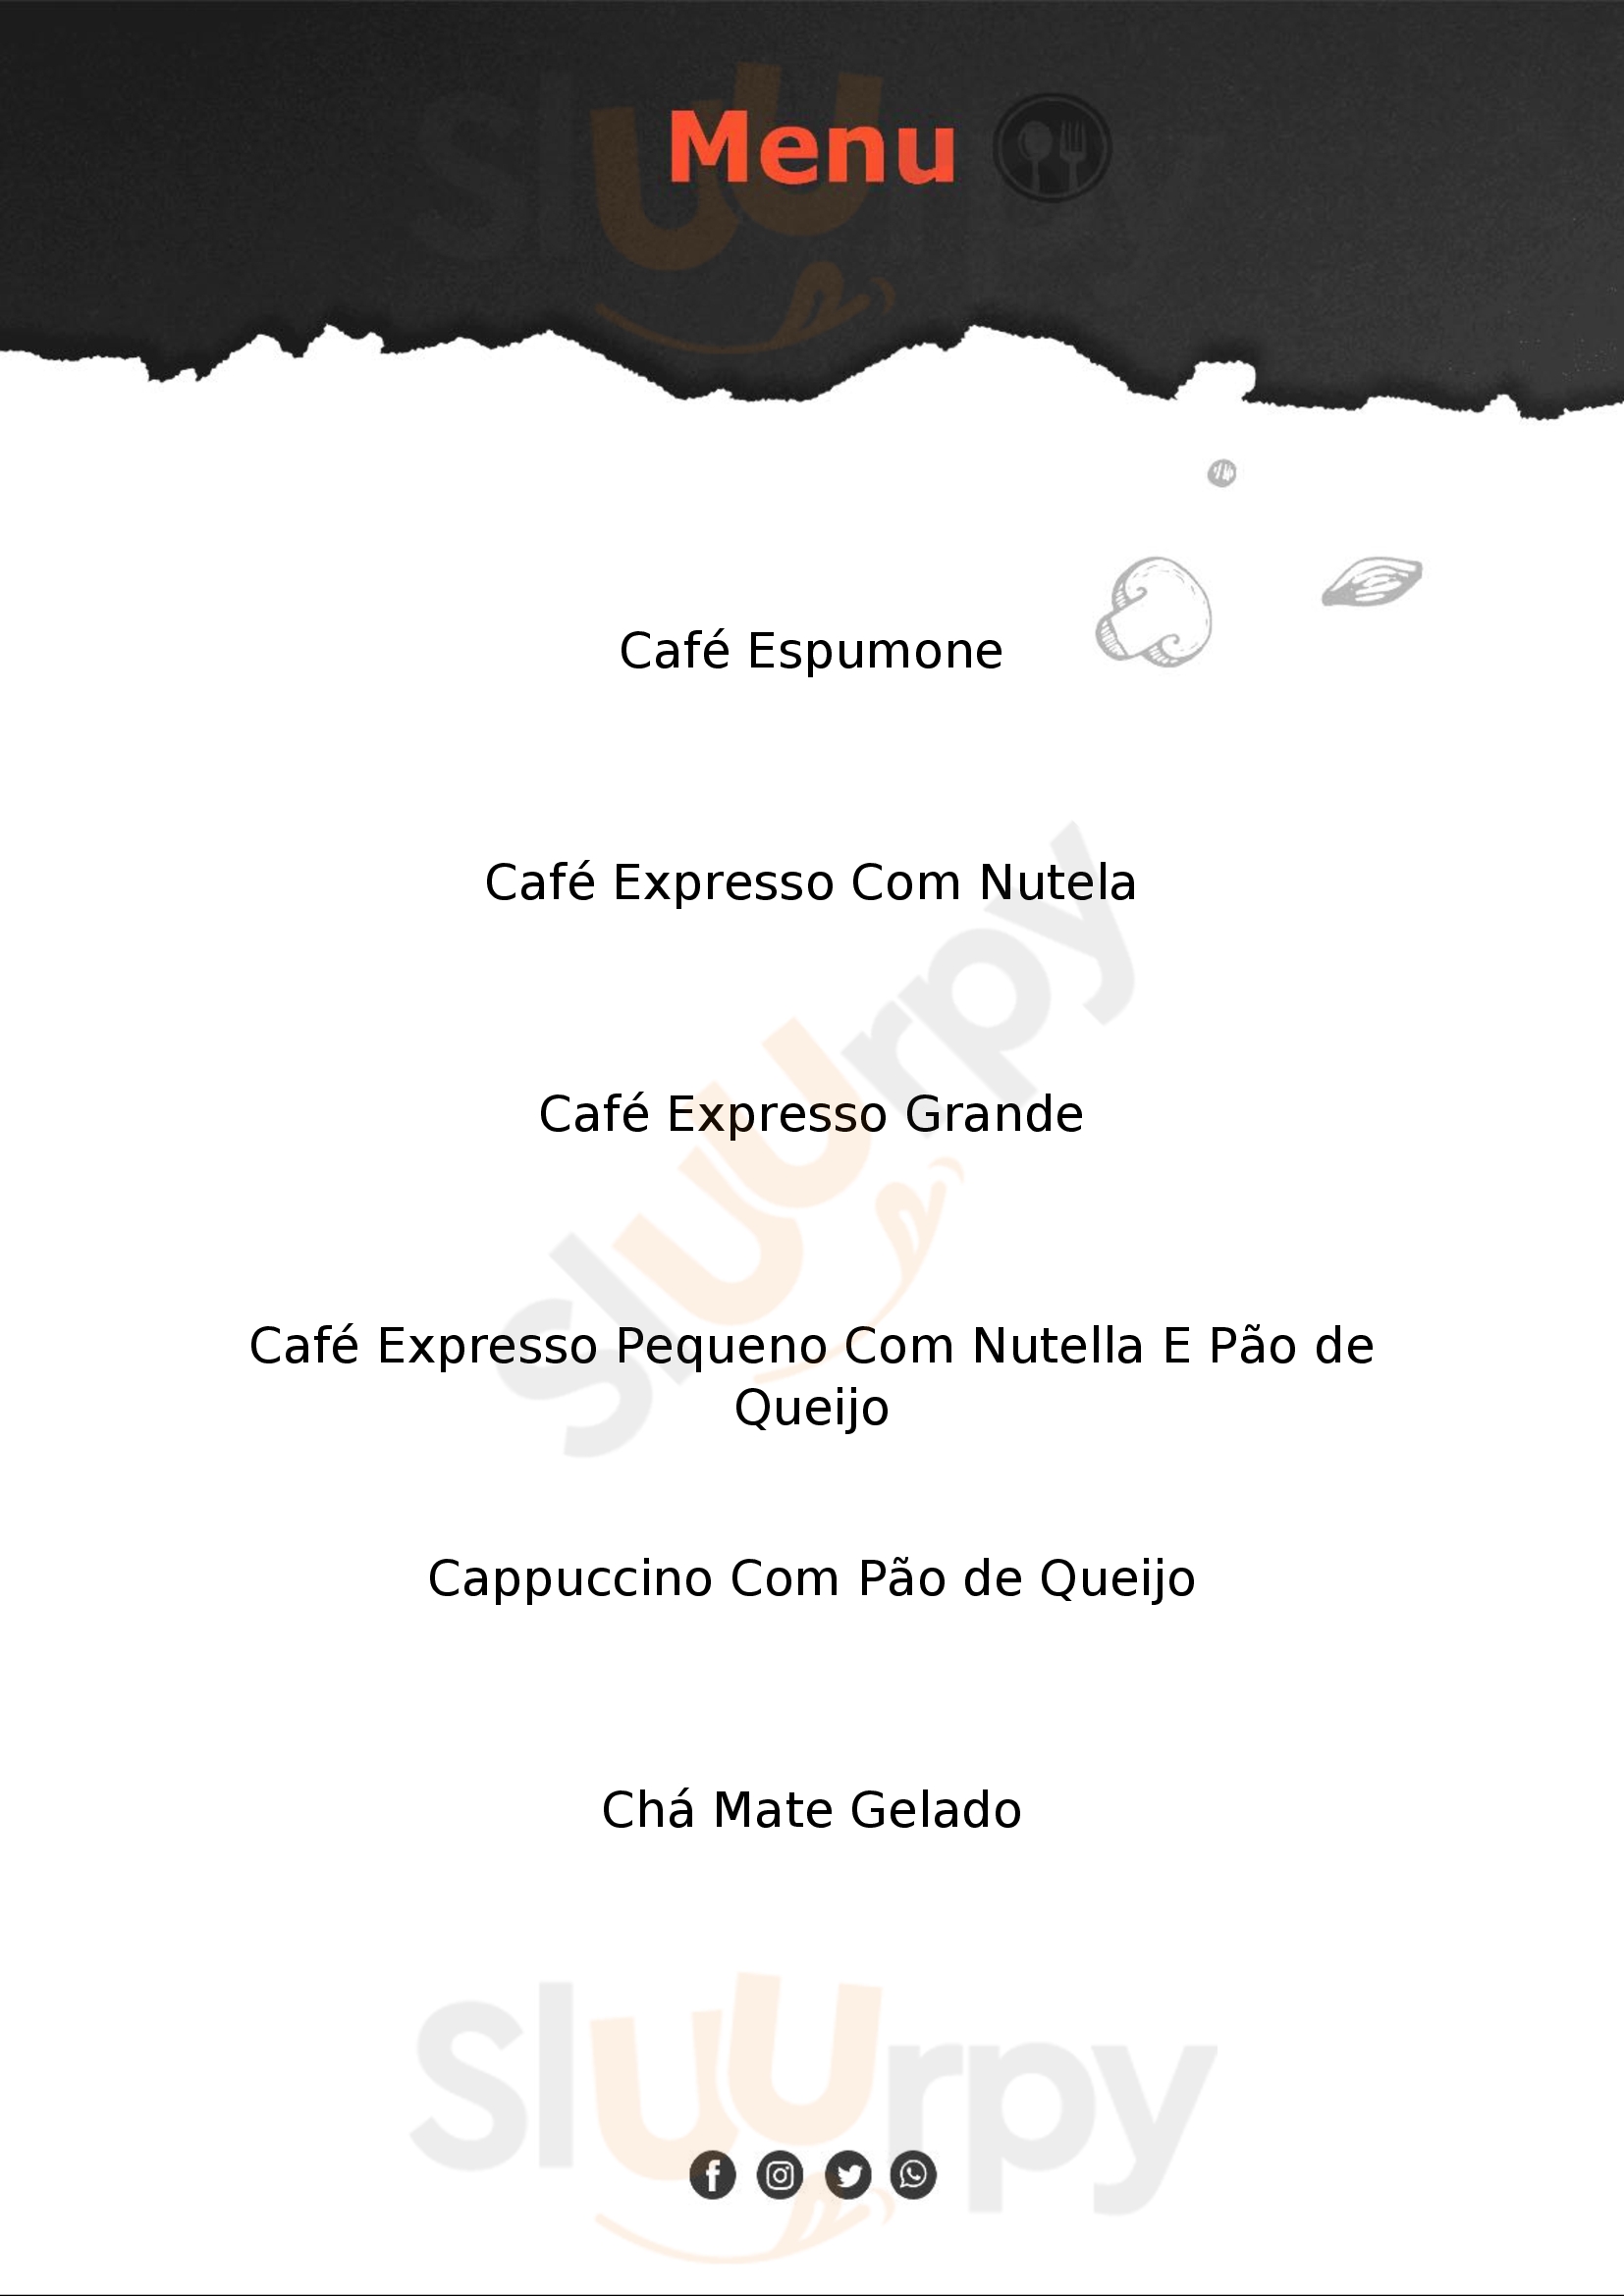 Cafe 3 Coracoes Fortaleza Menu - 1